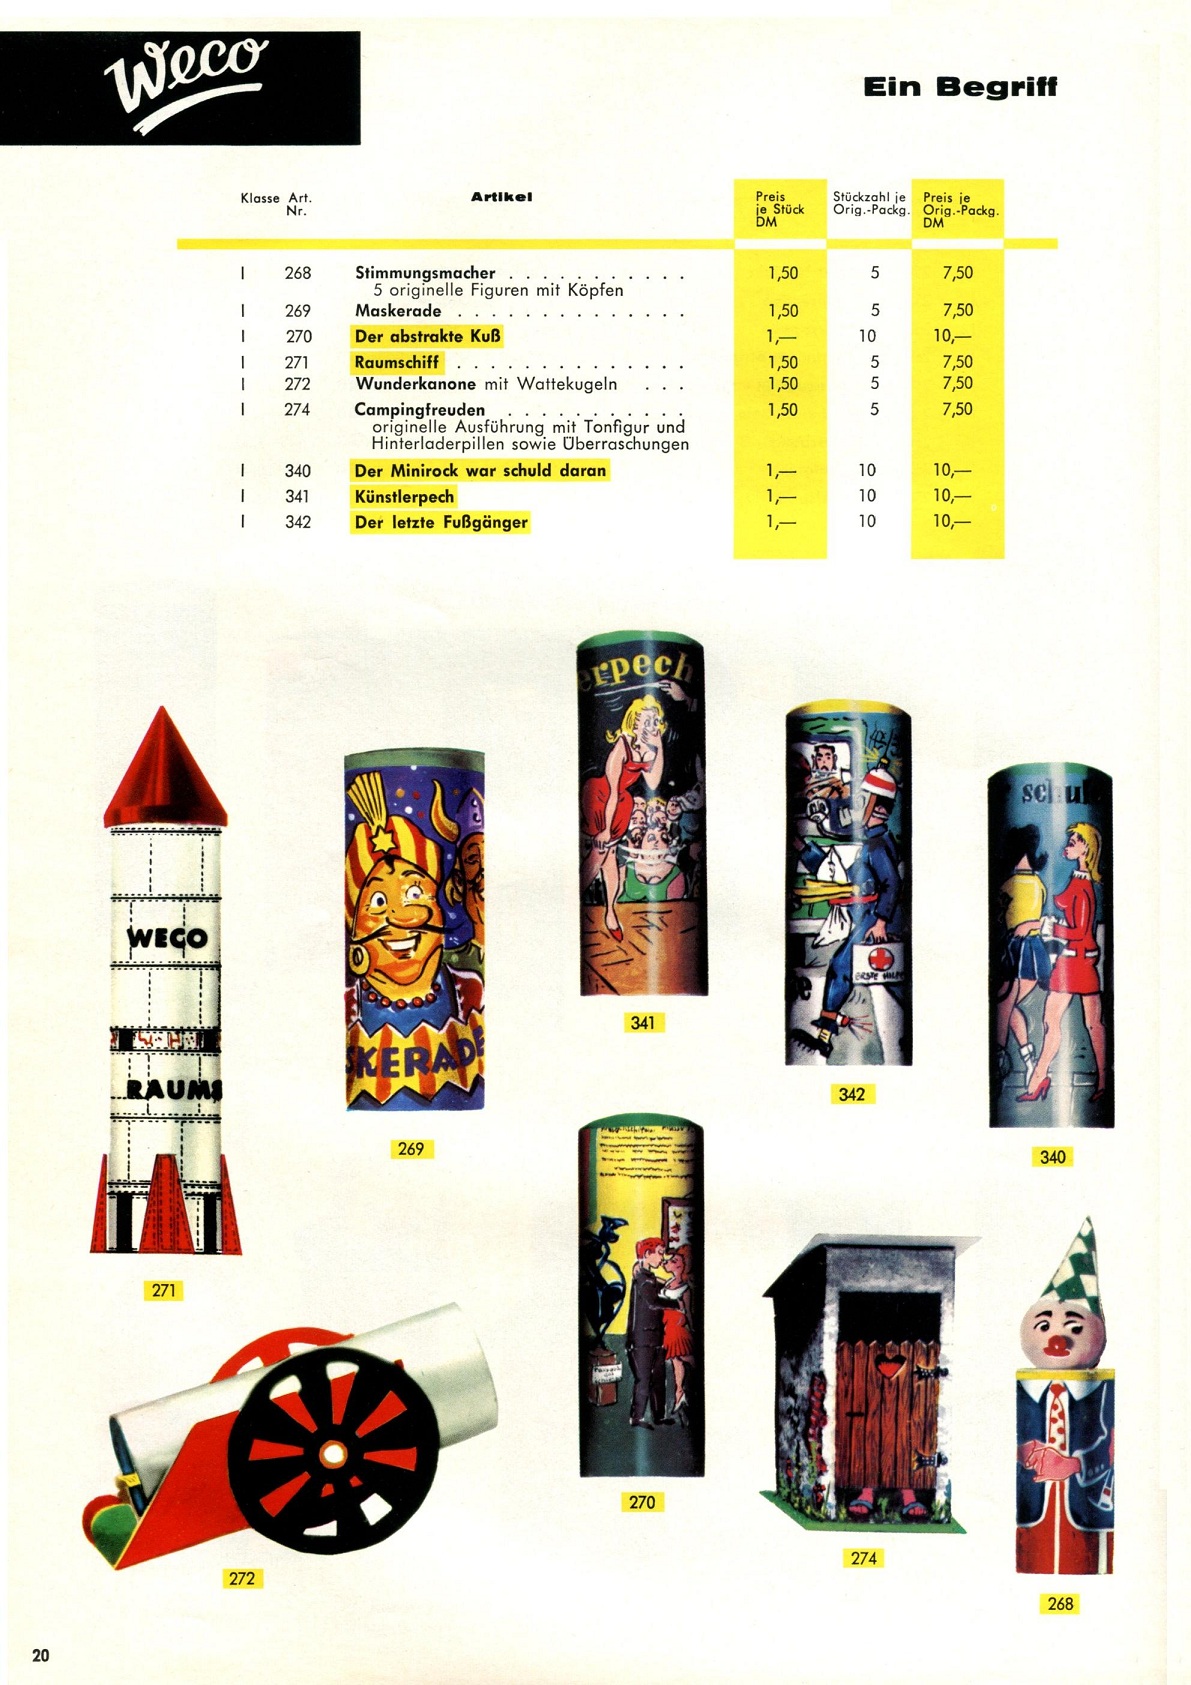 Weco Katalog 1967

(Danke an oudennieuwarchief.nl)